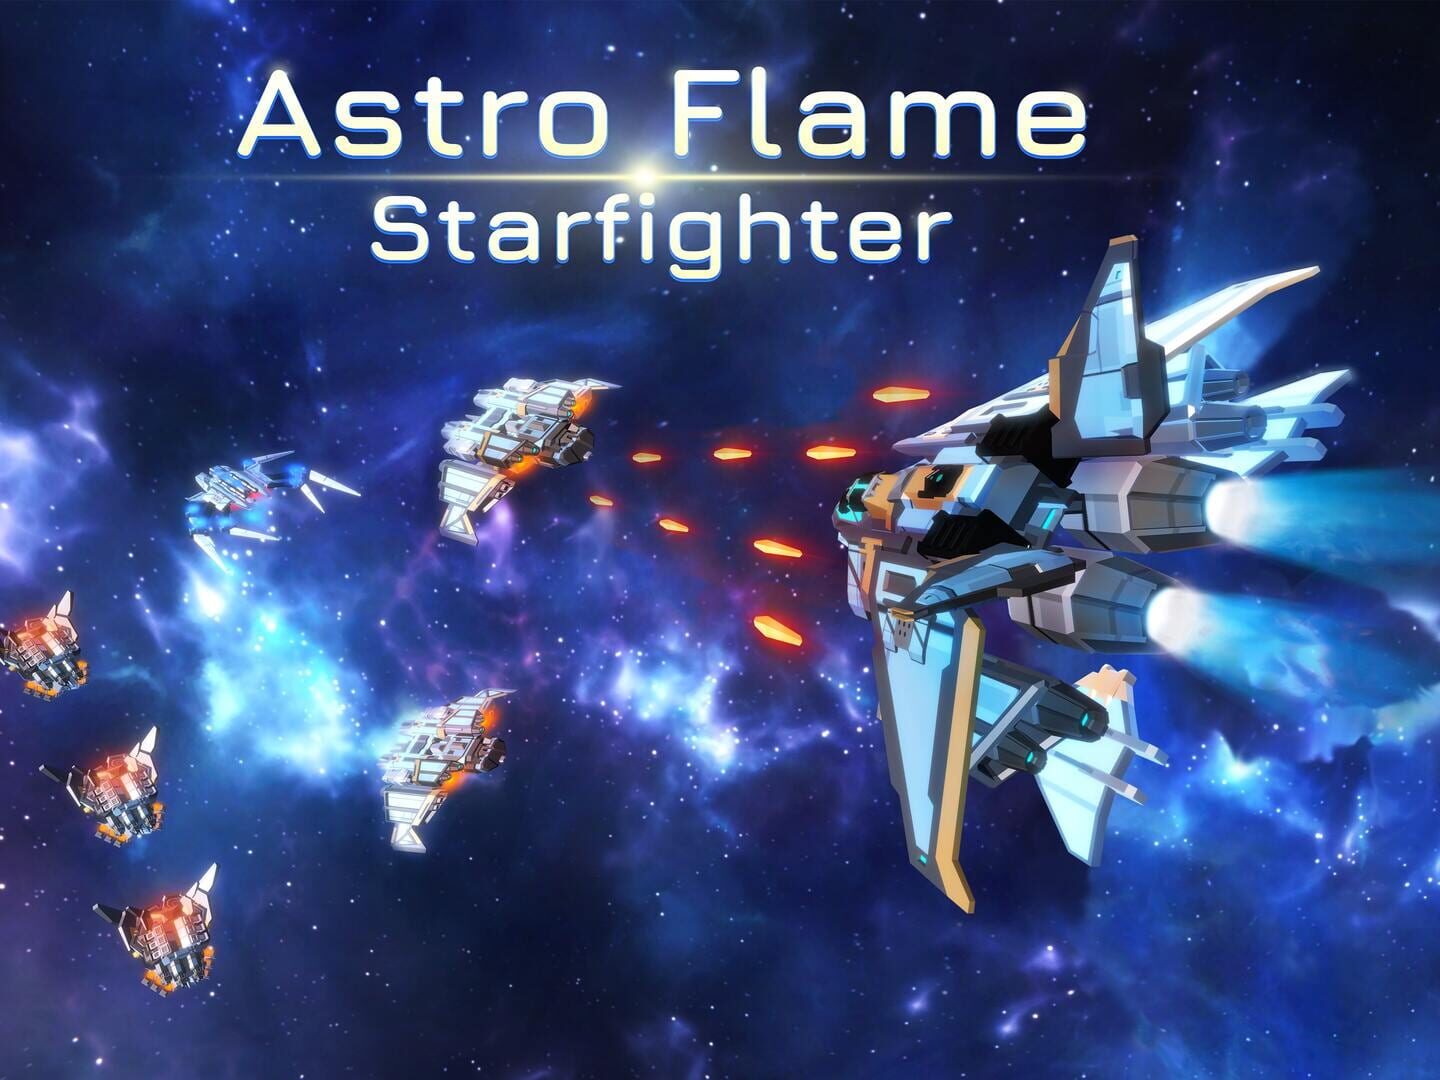 Astro Flame: Starfighter artwork